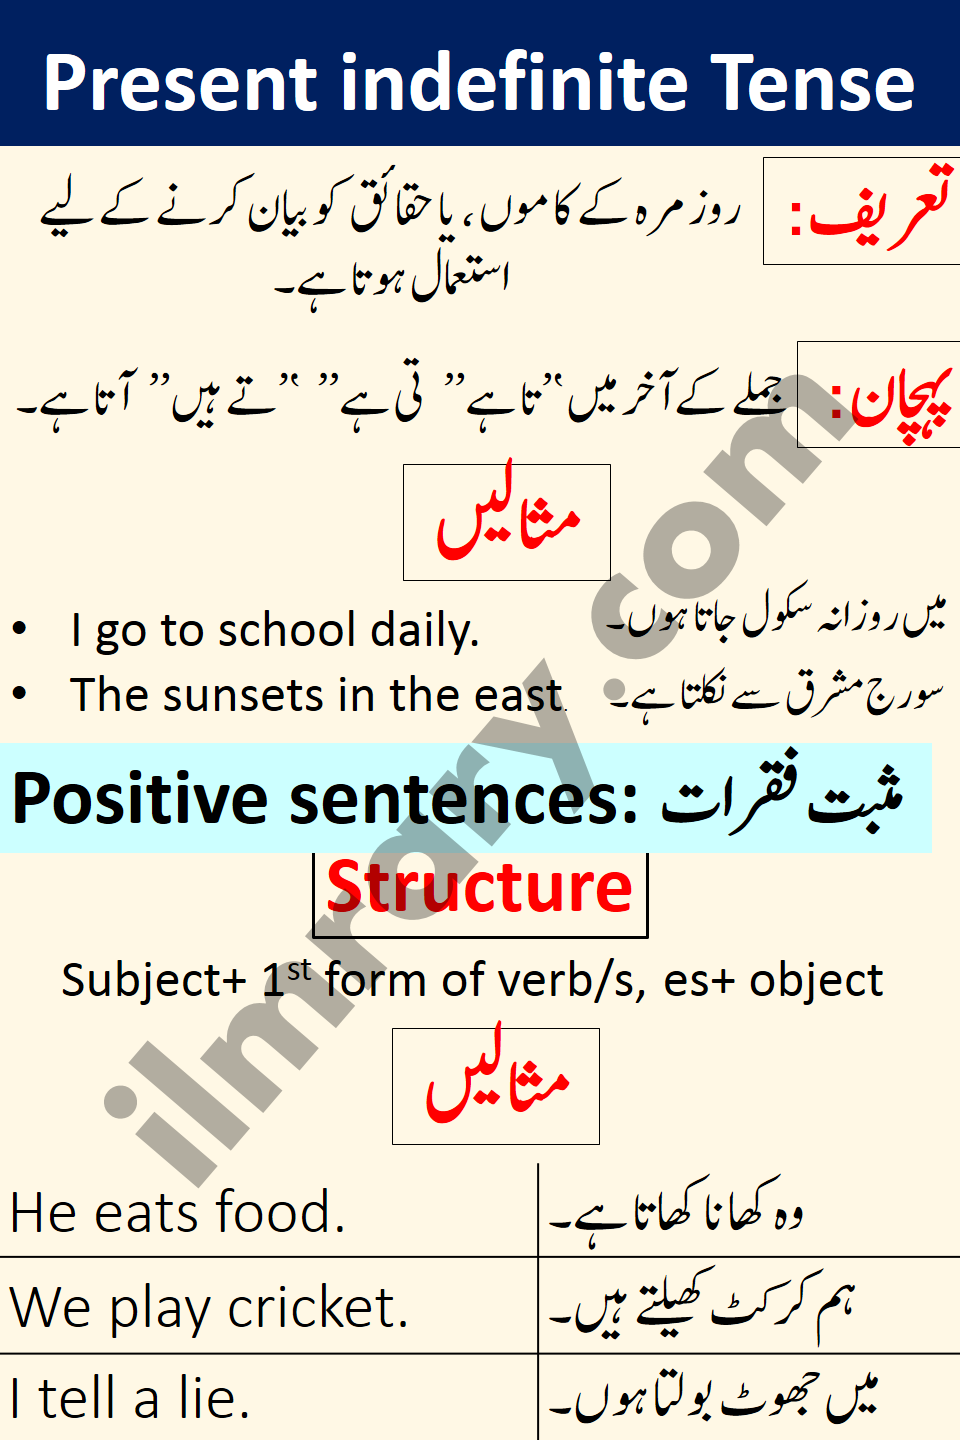 Positive Examples for Present indefinite Tense in Urdu